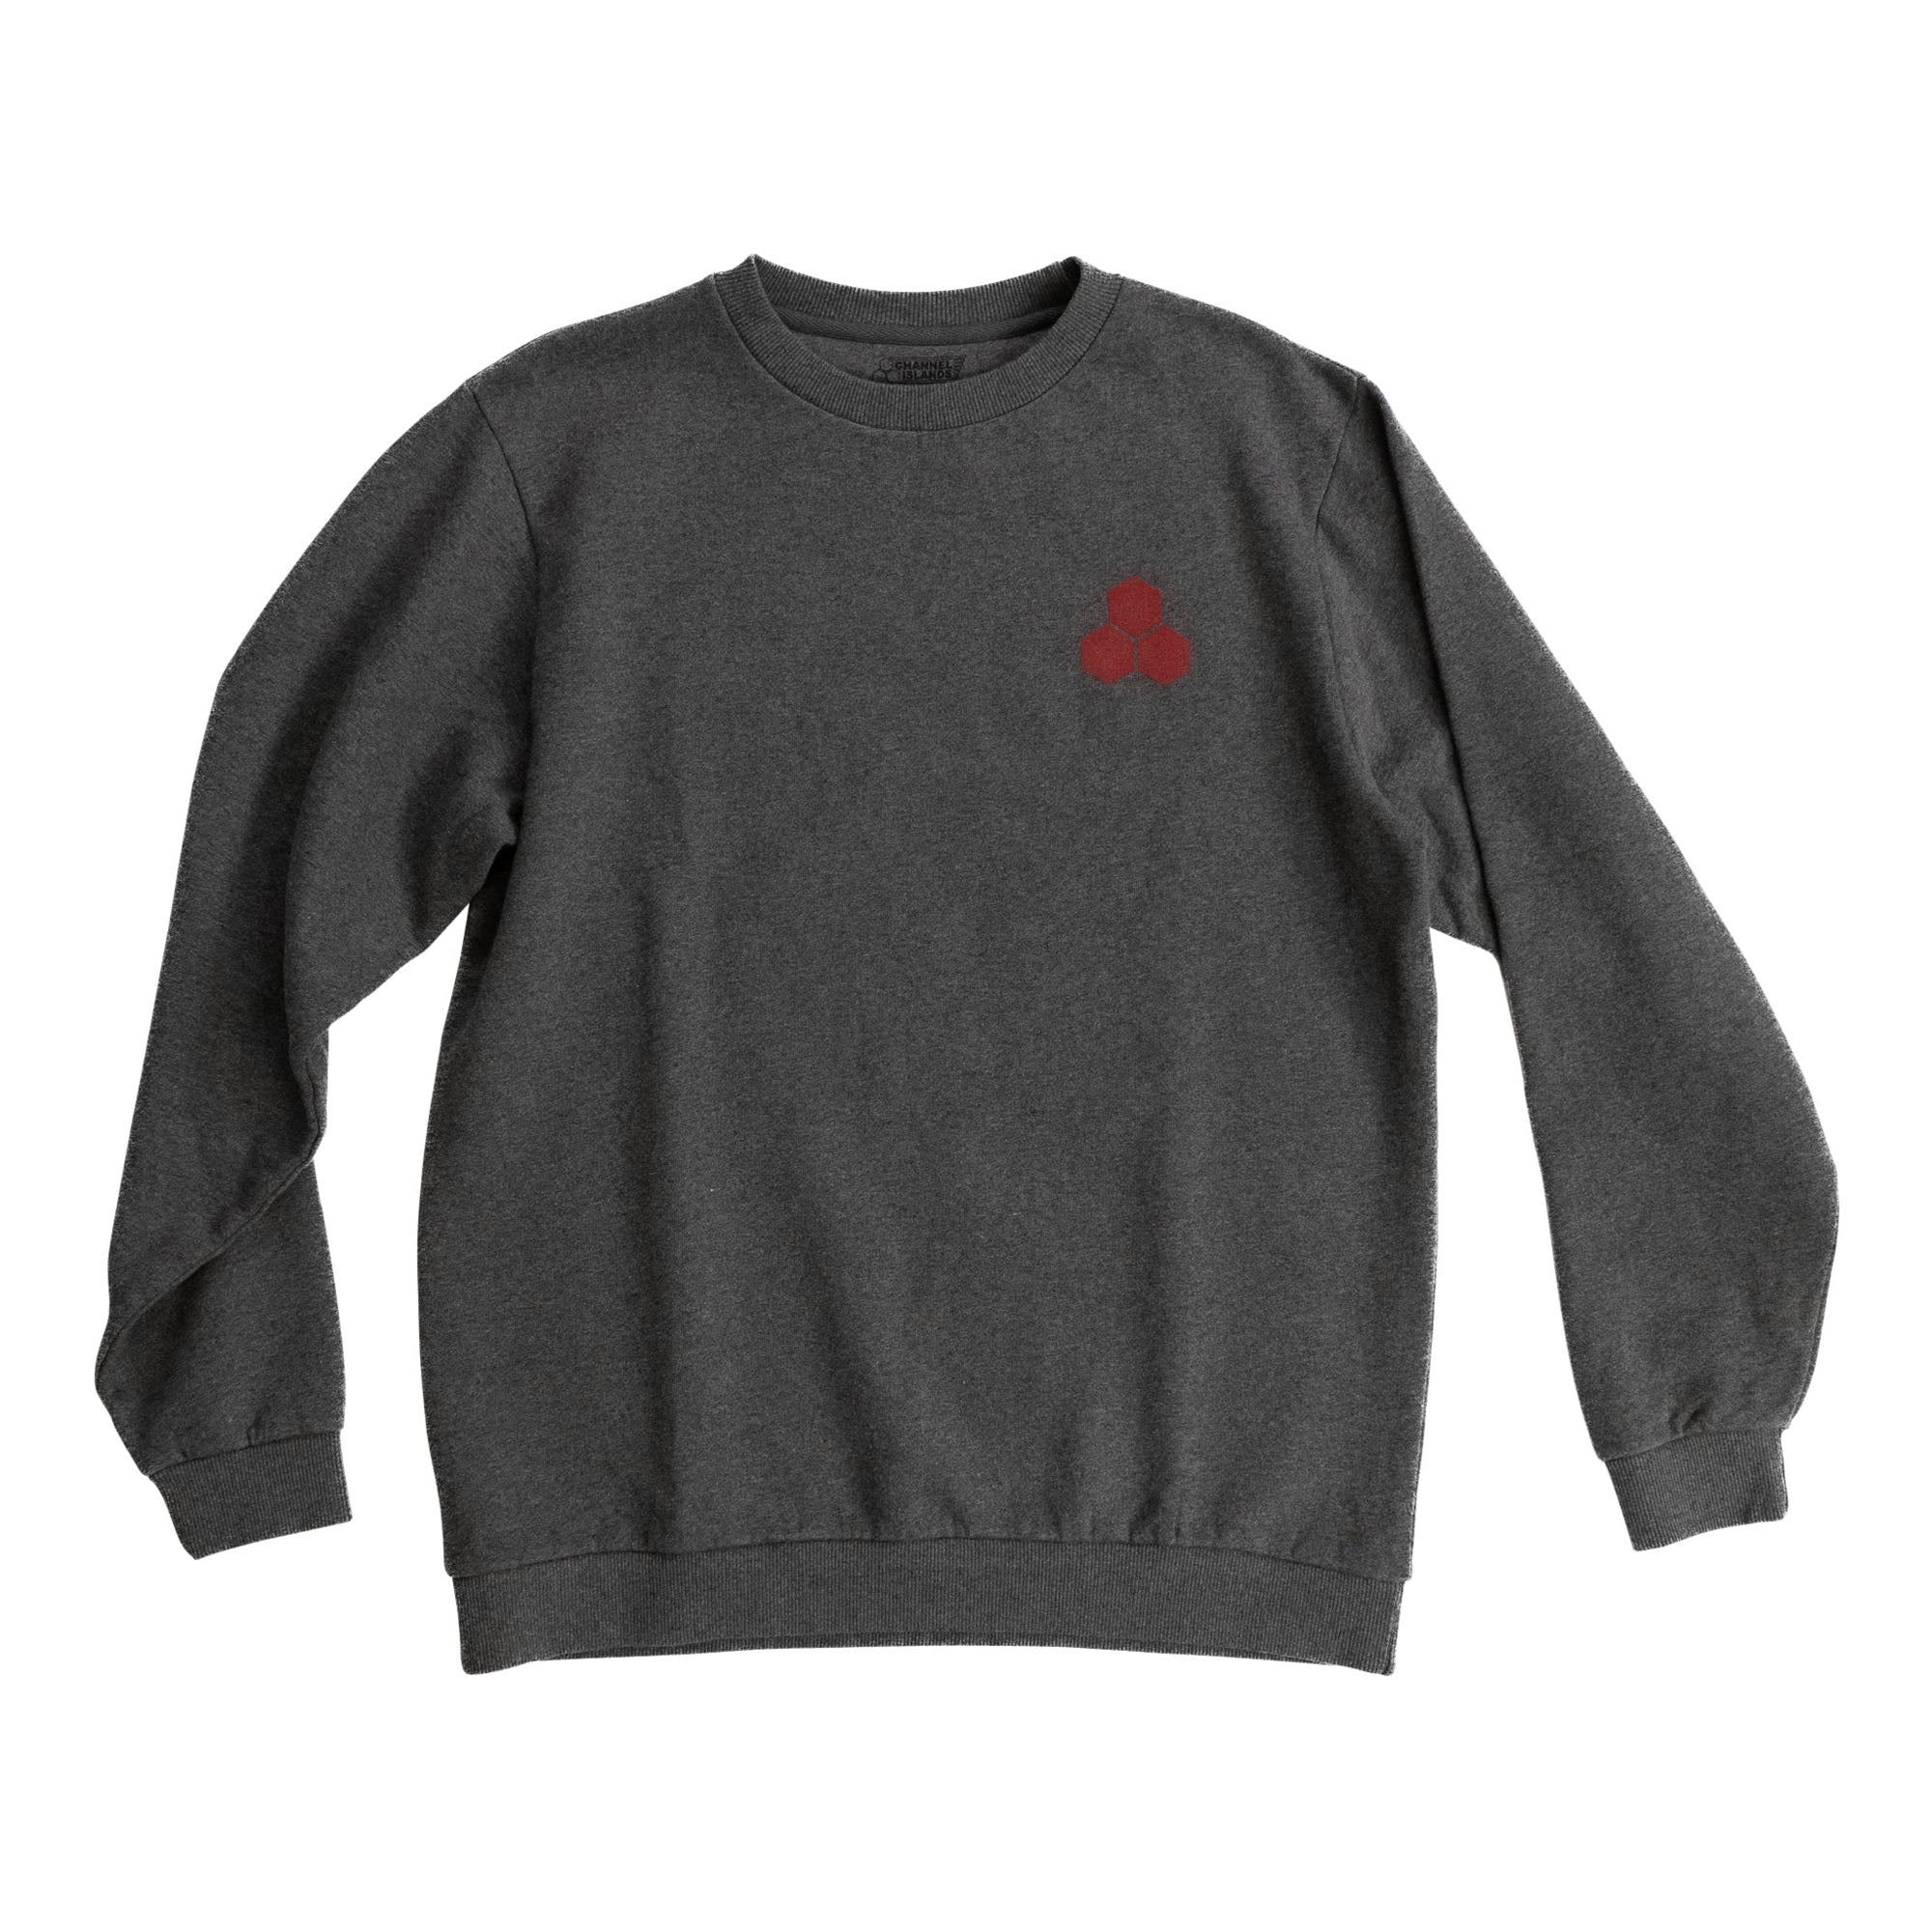 Channel Islands Quality Goods Crewneck Men's L/S Sweater